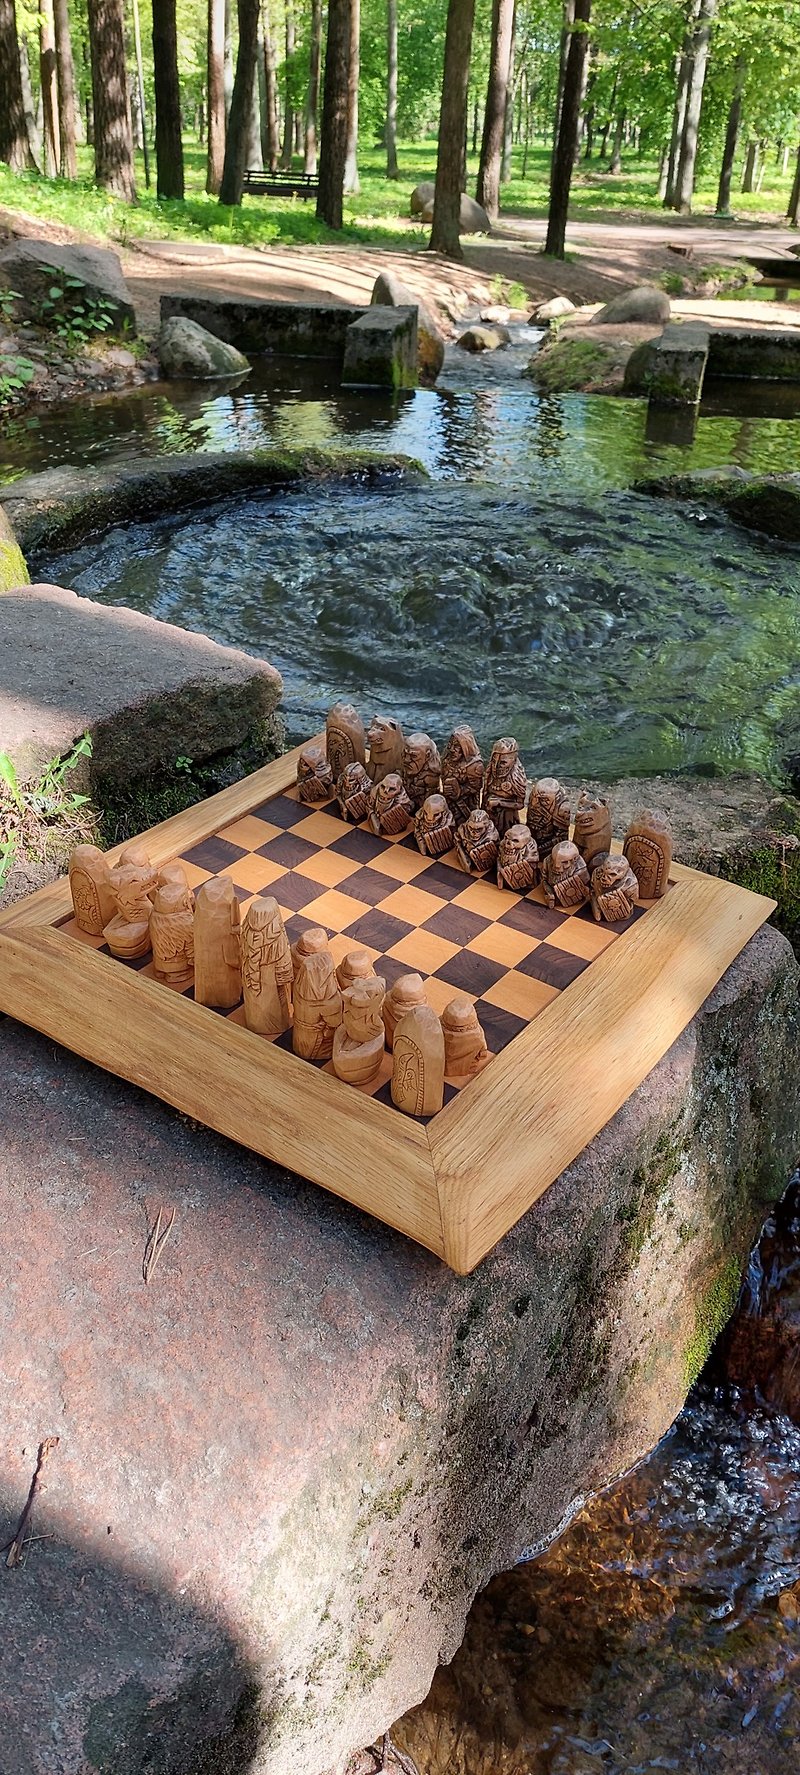 Viking chess set ragnarok board game - 公仔模型 - 木頭 金色